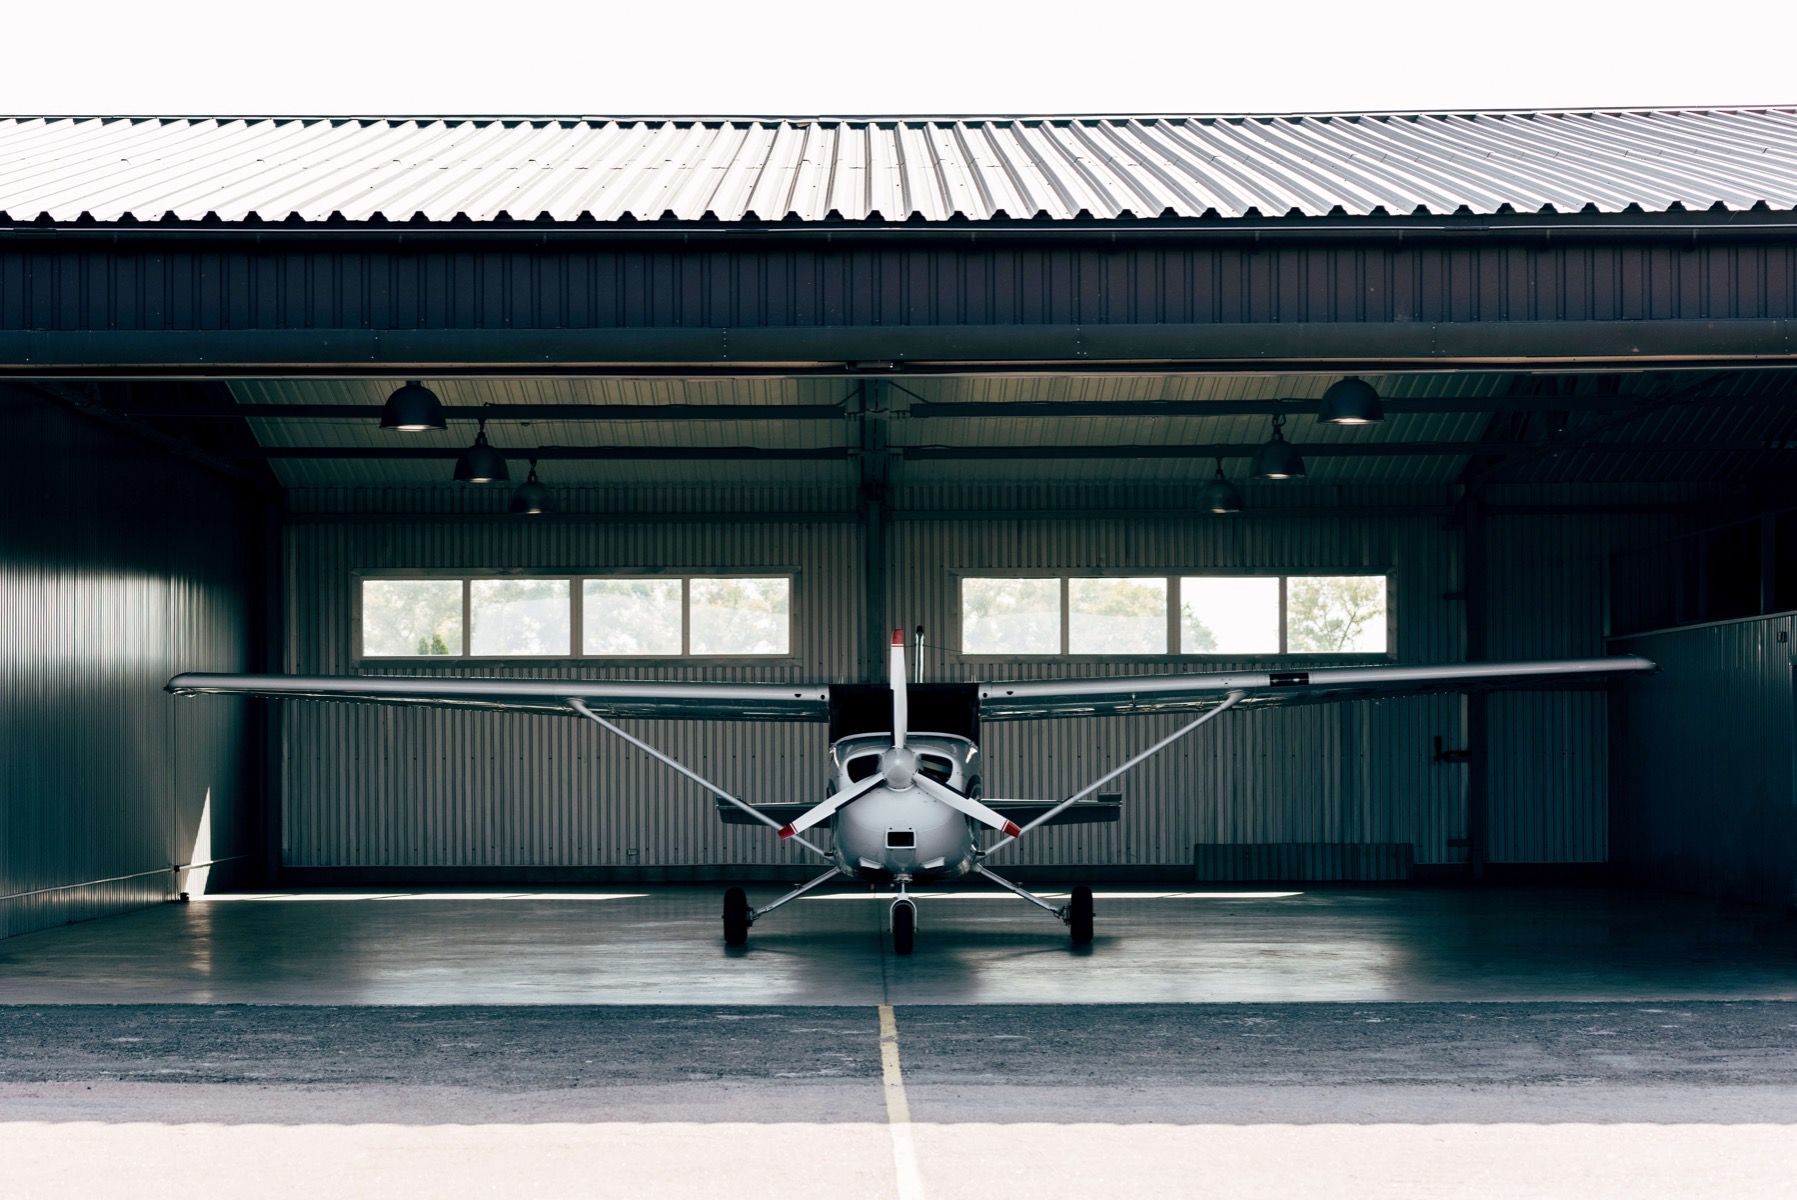 Transport Vliegtuigje in hangar